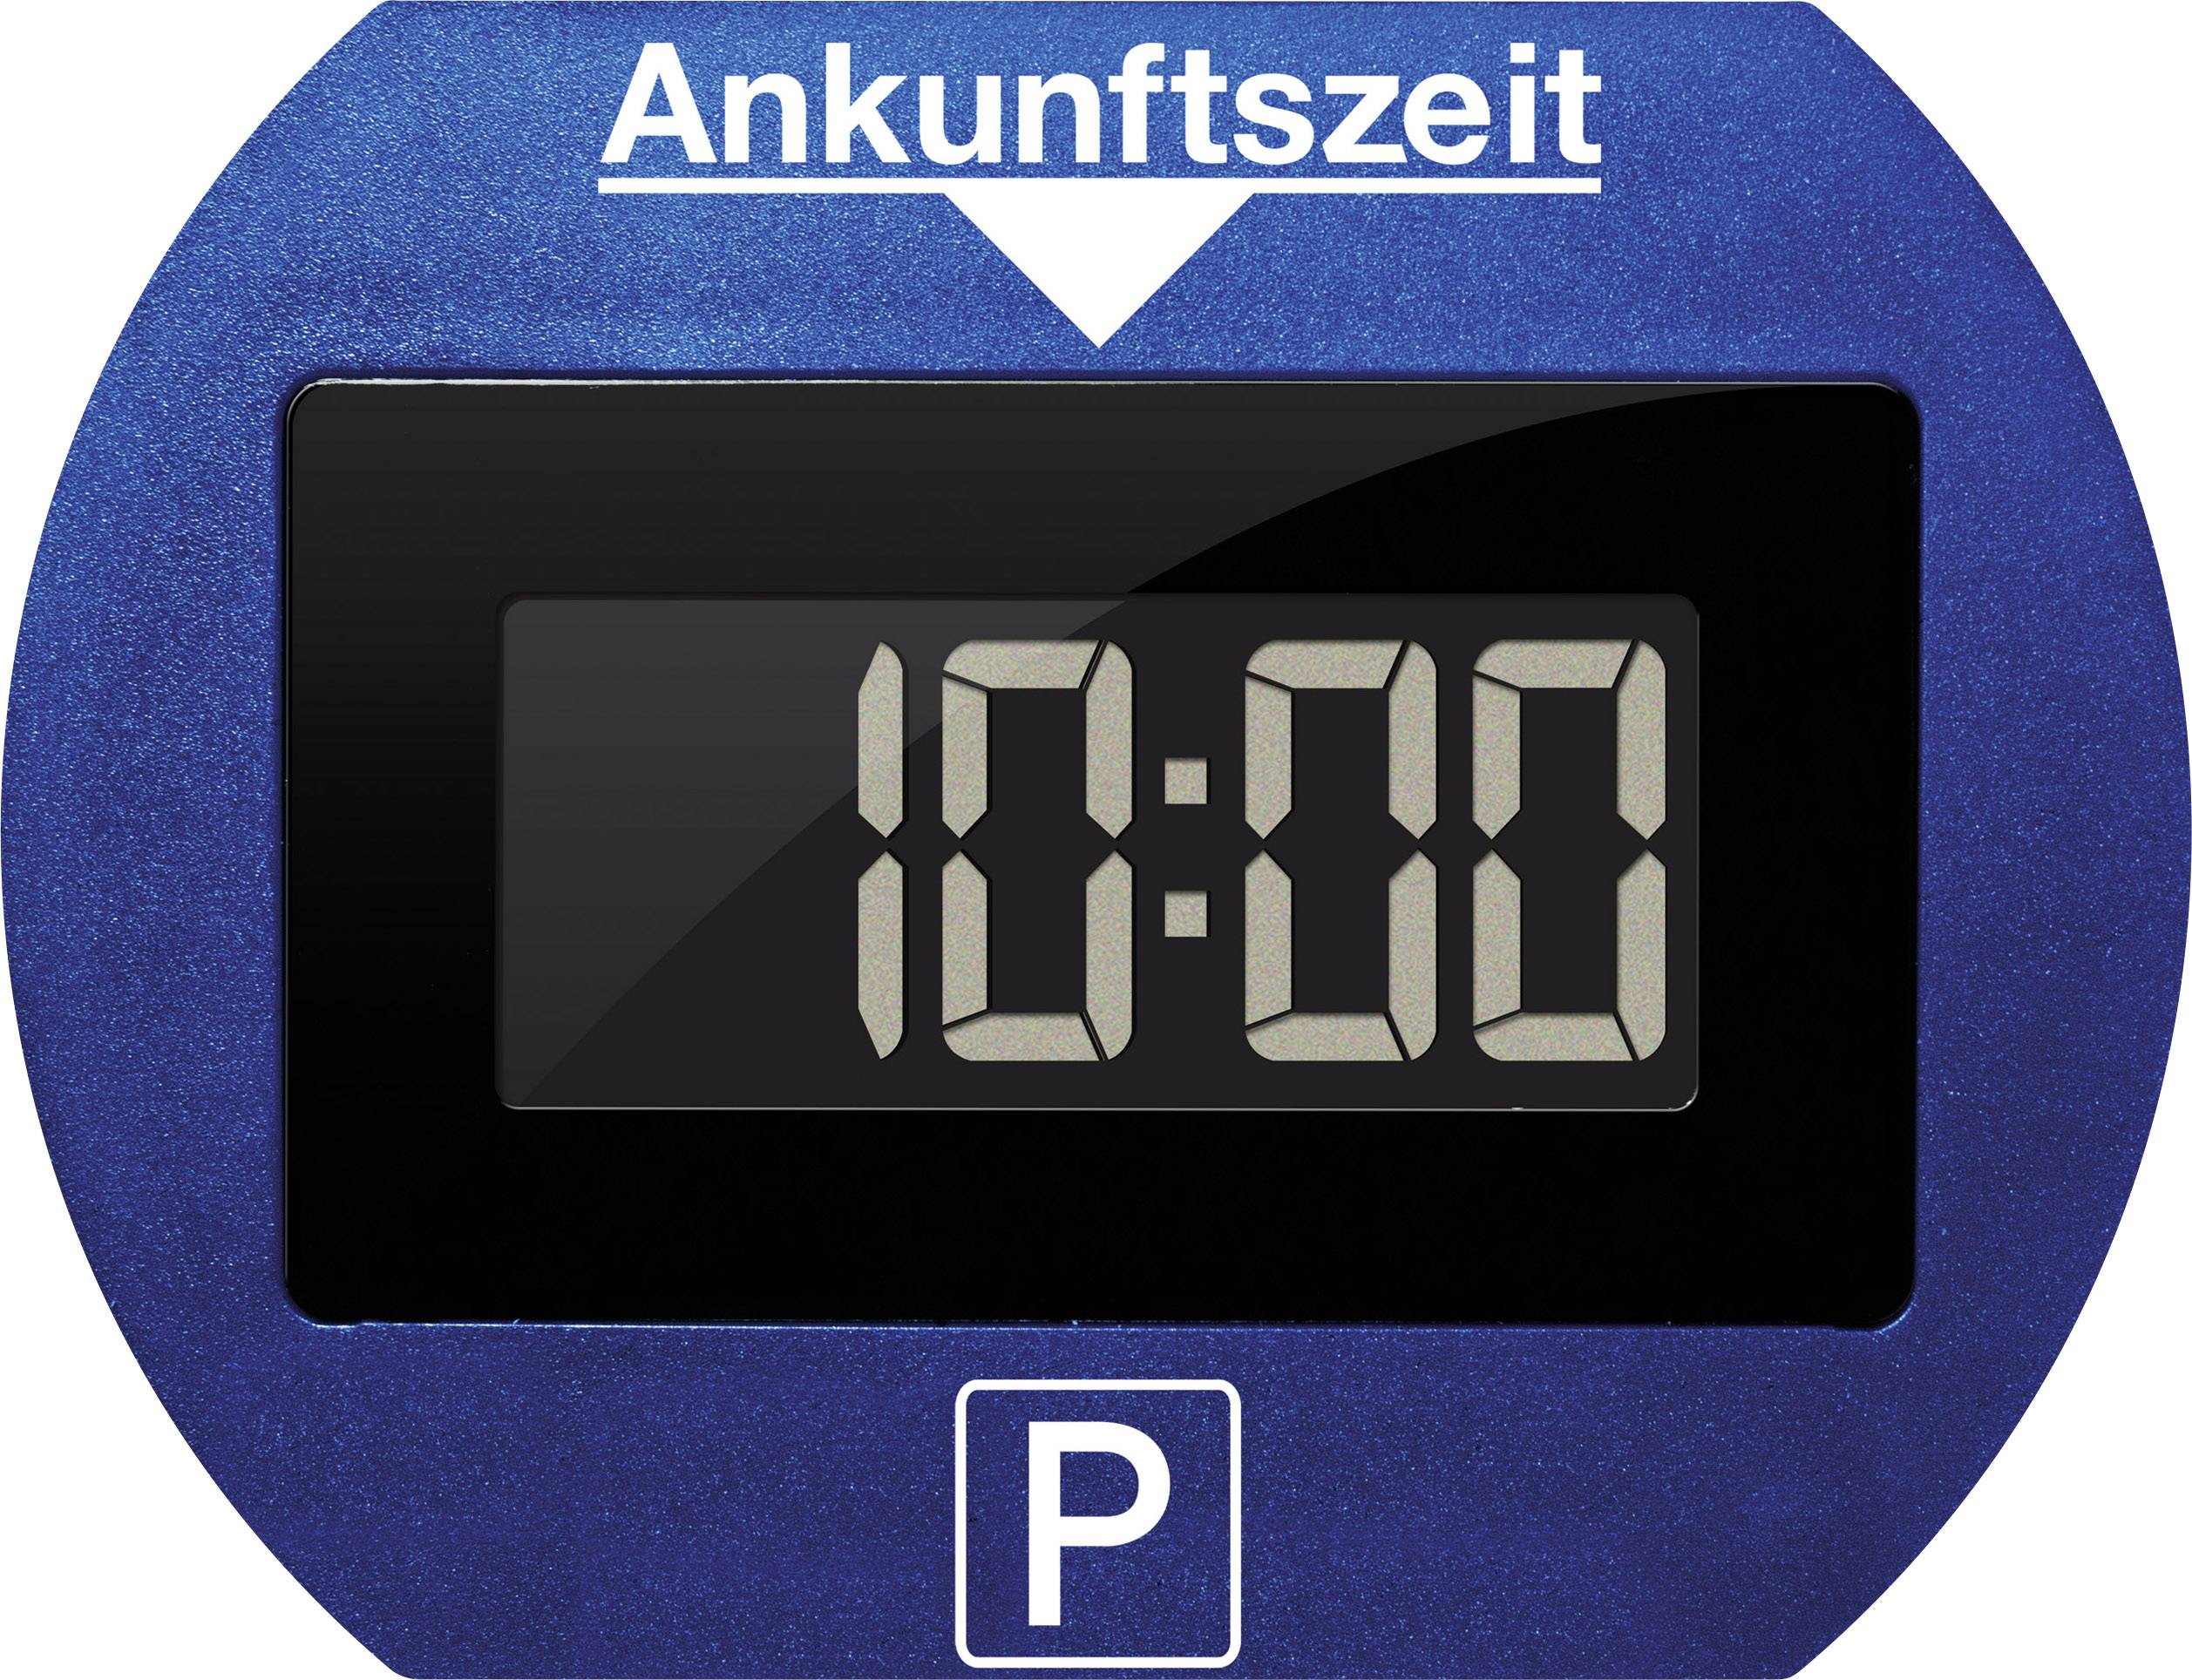 Buy Needit ParkLite 1411 Parking disc 100 mm x 77 mm x 18 mm self-adhesive